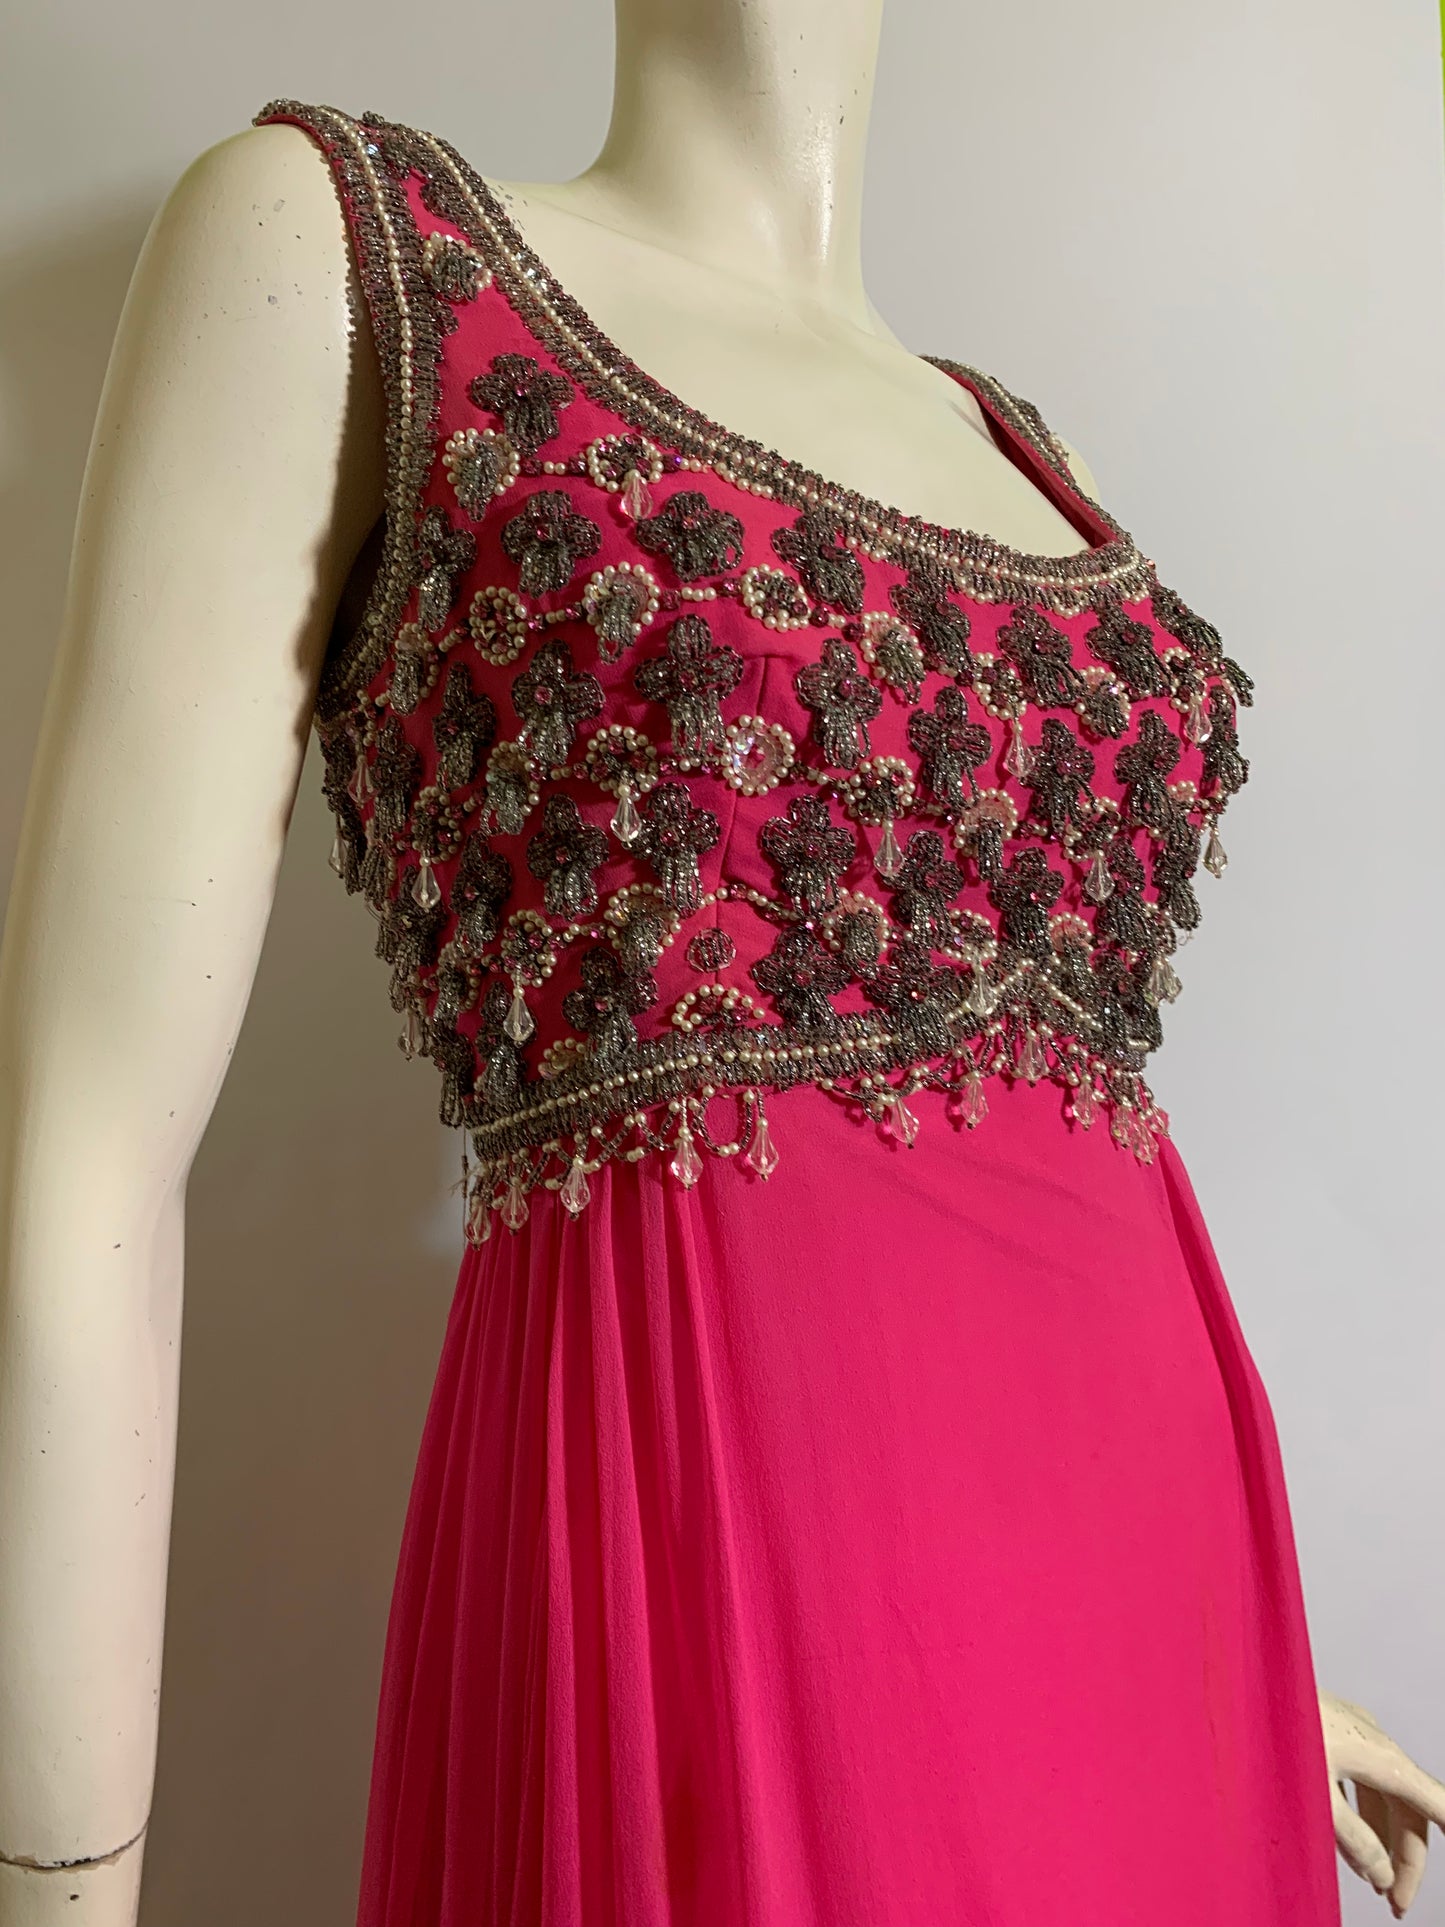 Shocking Pink Empire Waist Beaded Silk Chiffon Dress circa 1960s